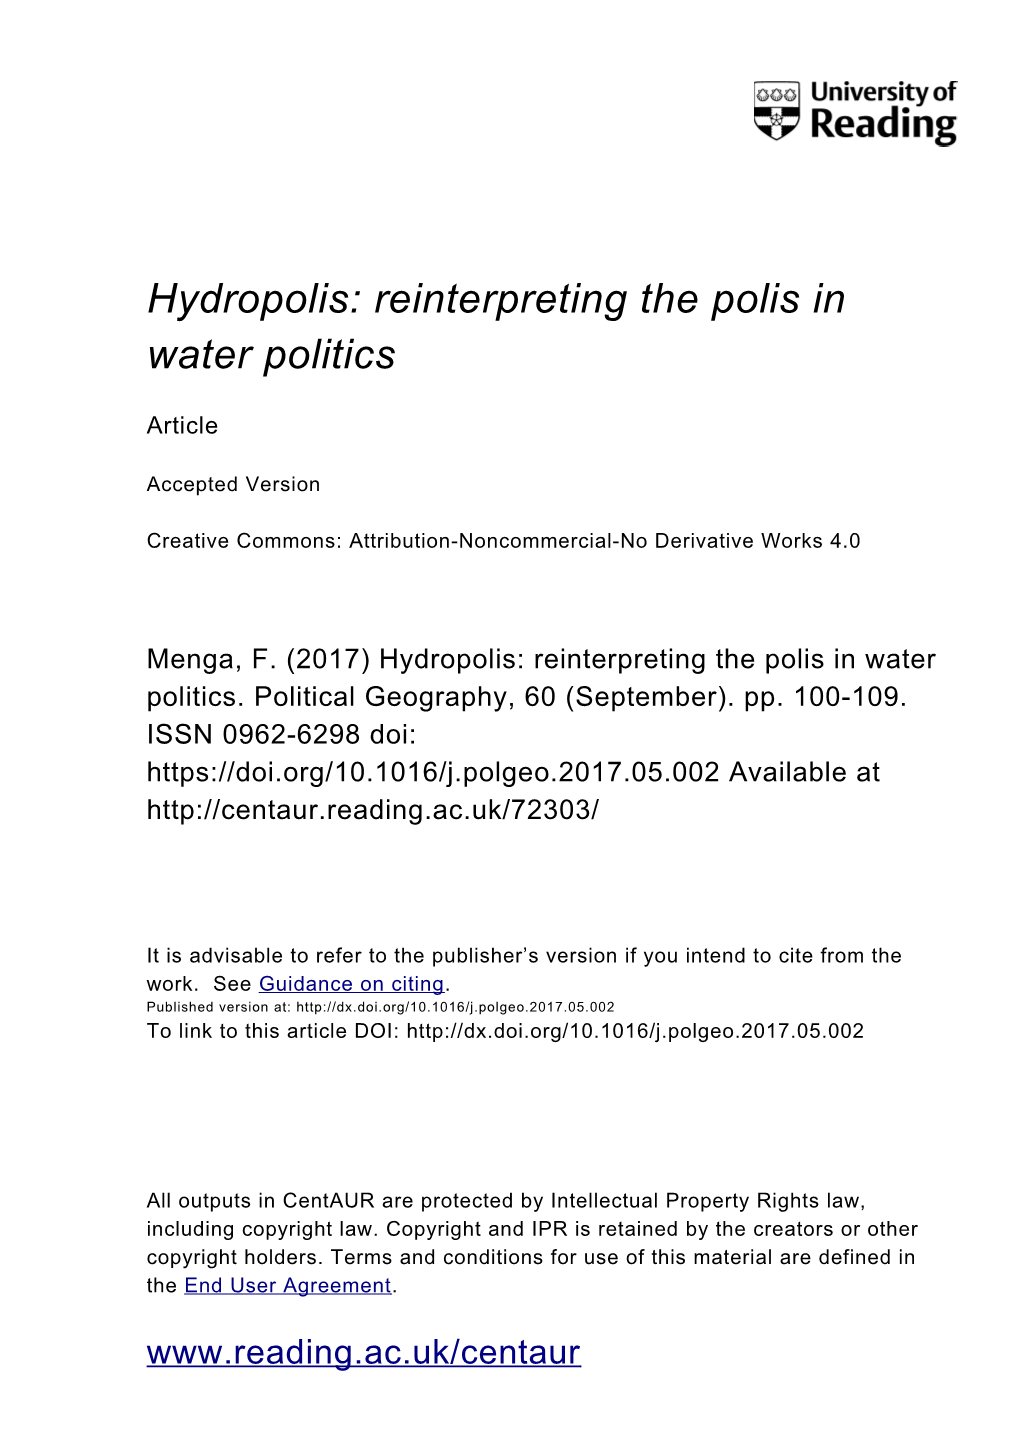 Hydropolis: Reinterpreting the Polis in Water Politics